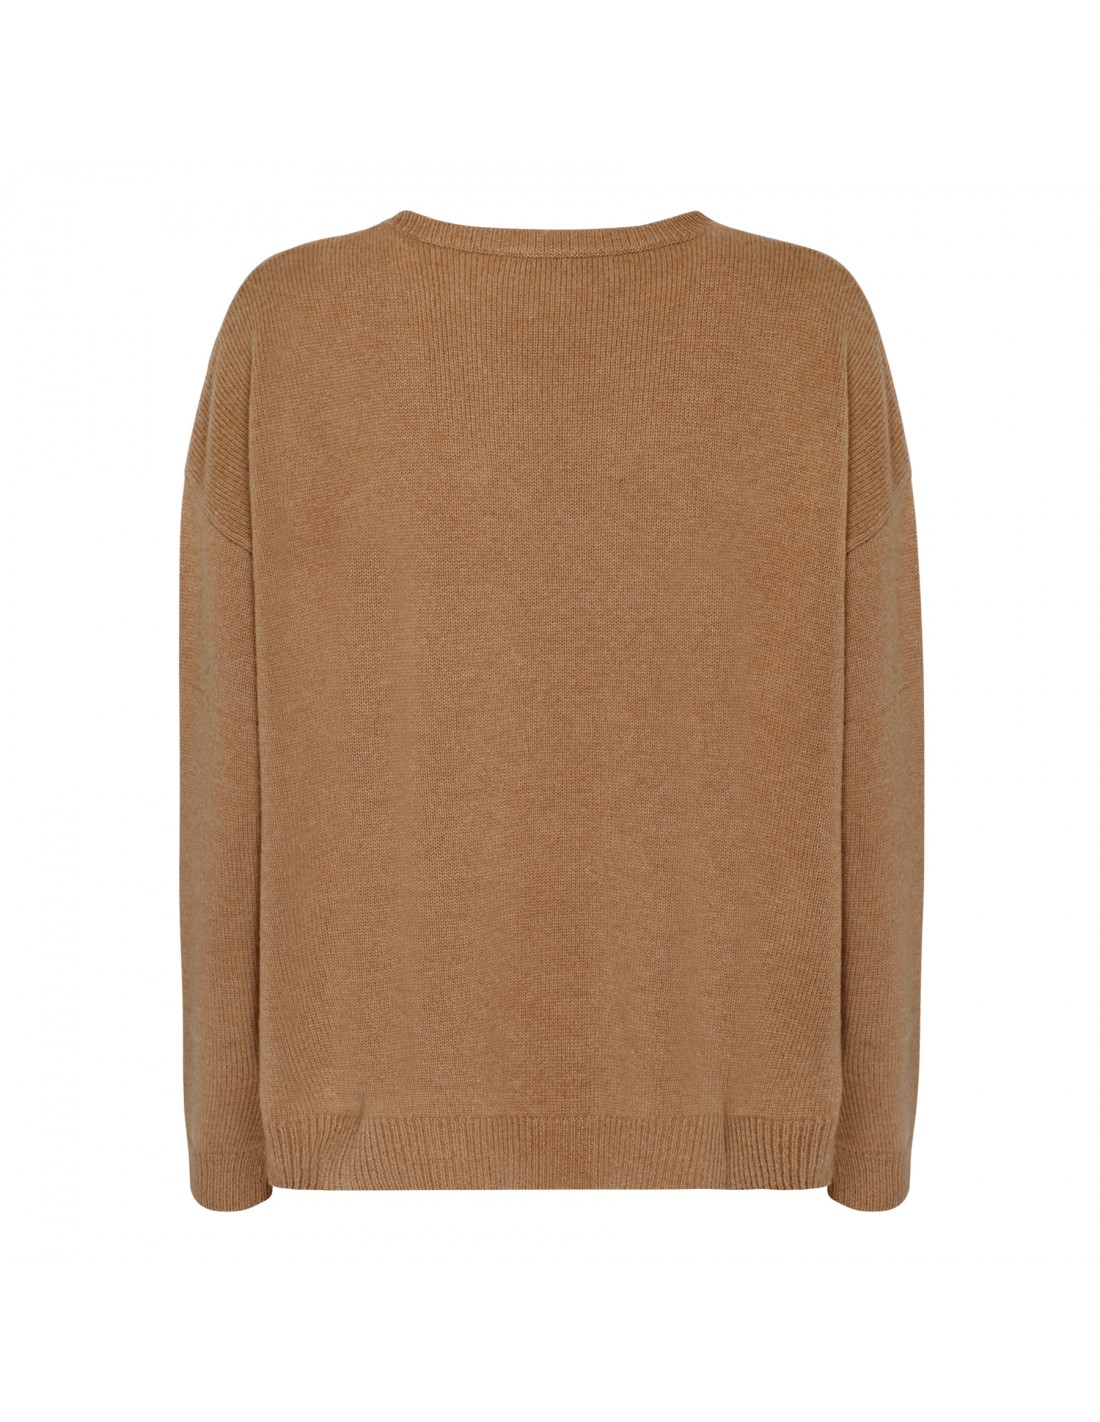 Edo beige cashmere sweater